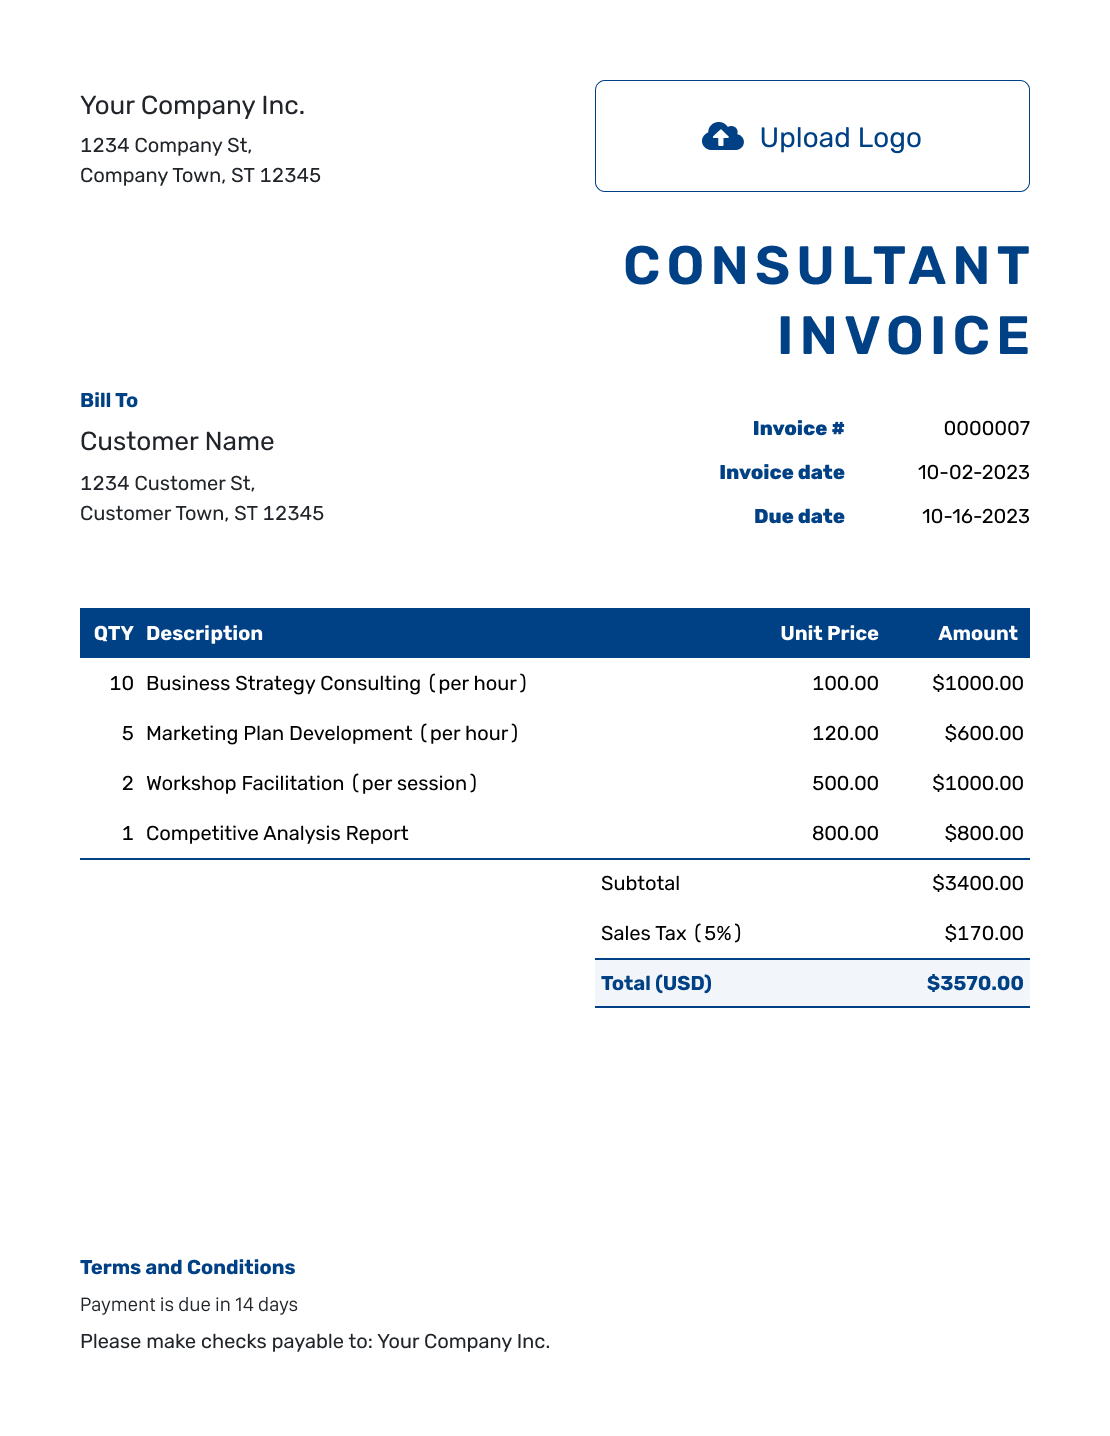 Sample Consultant Invoice Template